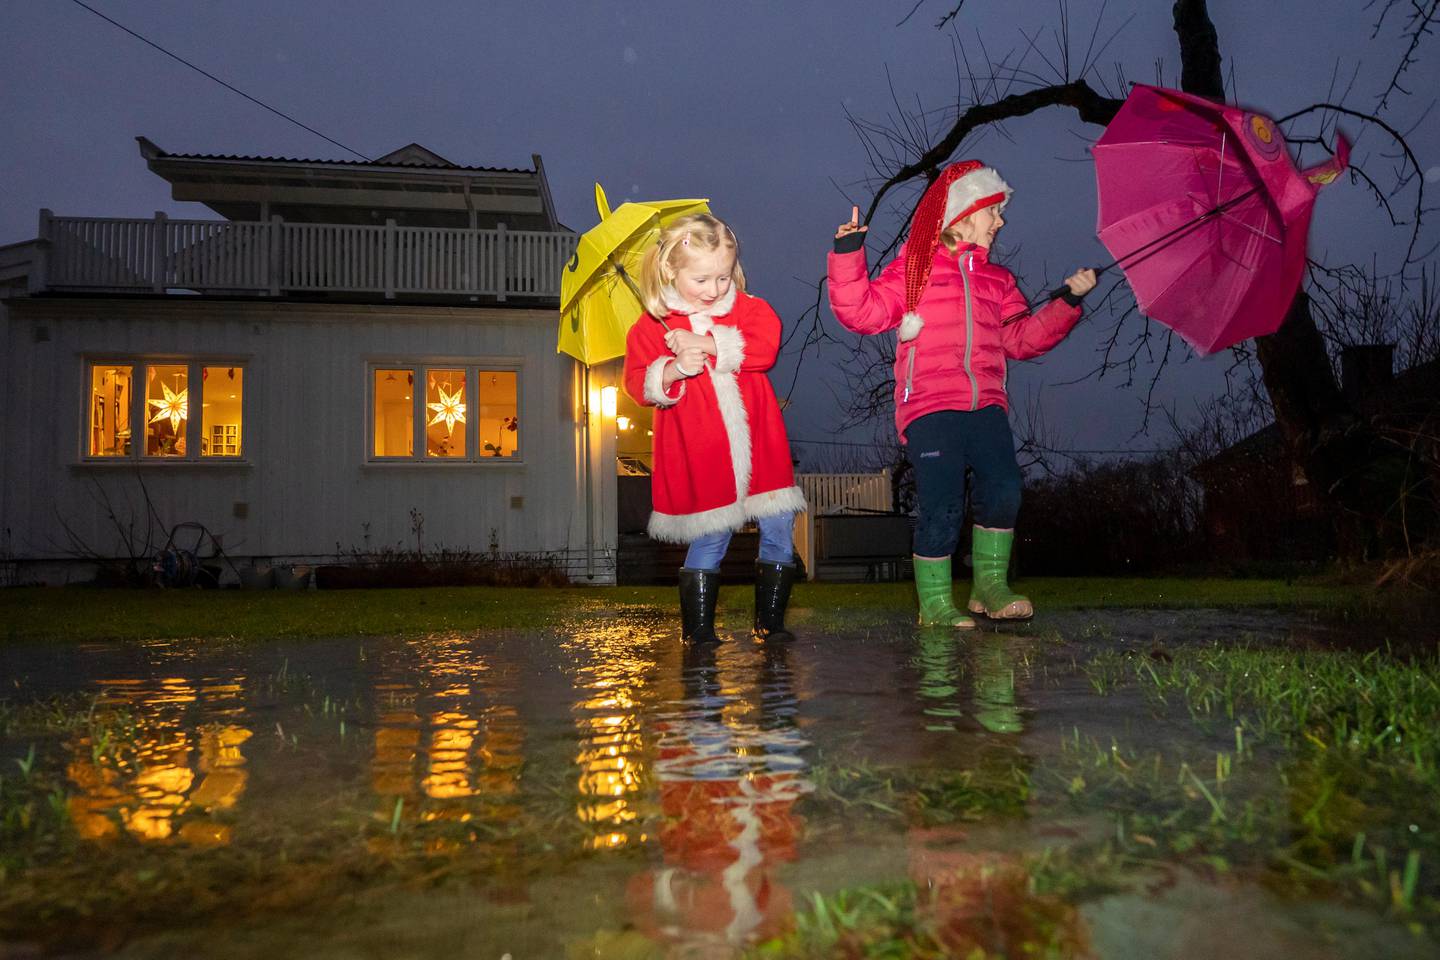 Oslo 20201215. 
Søstrene Maja (3) og Ida Åkerstrøm (5) leker i vannmassene i en oversvømt hage på Nordstrand i Oslo før jul. Det har kommet store mengde regn i hovedstaden i desember.
Foto: Heiko Junge / NTB